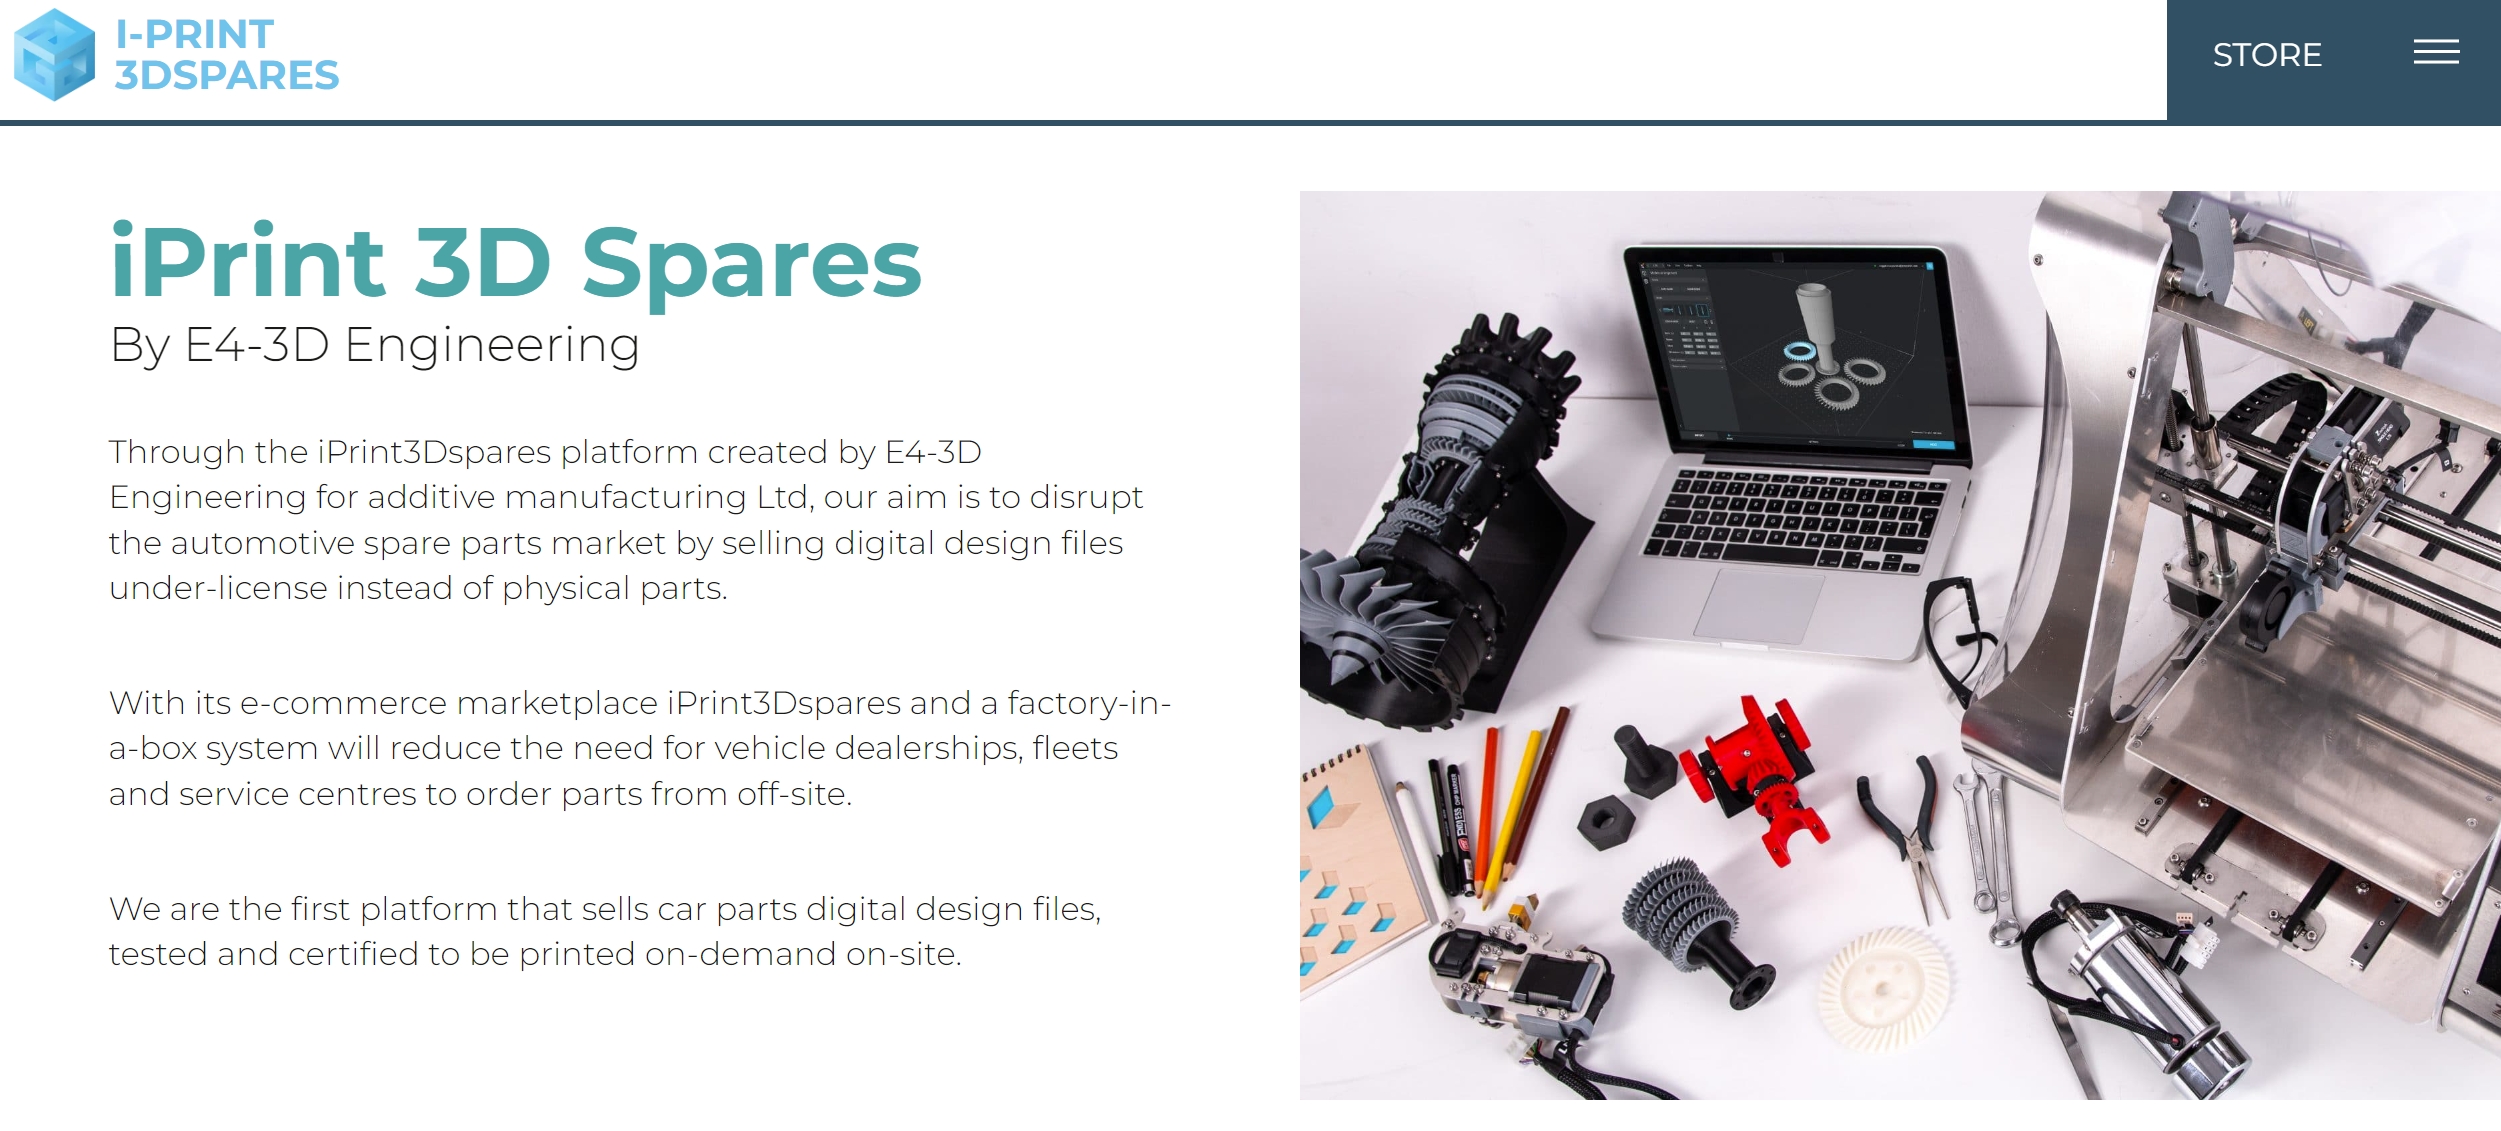 iPrinte3DSpares 3D Printed Car Parts